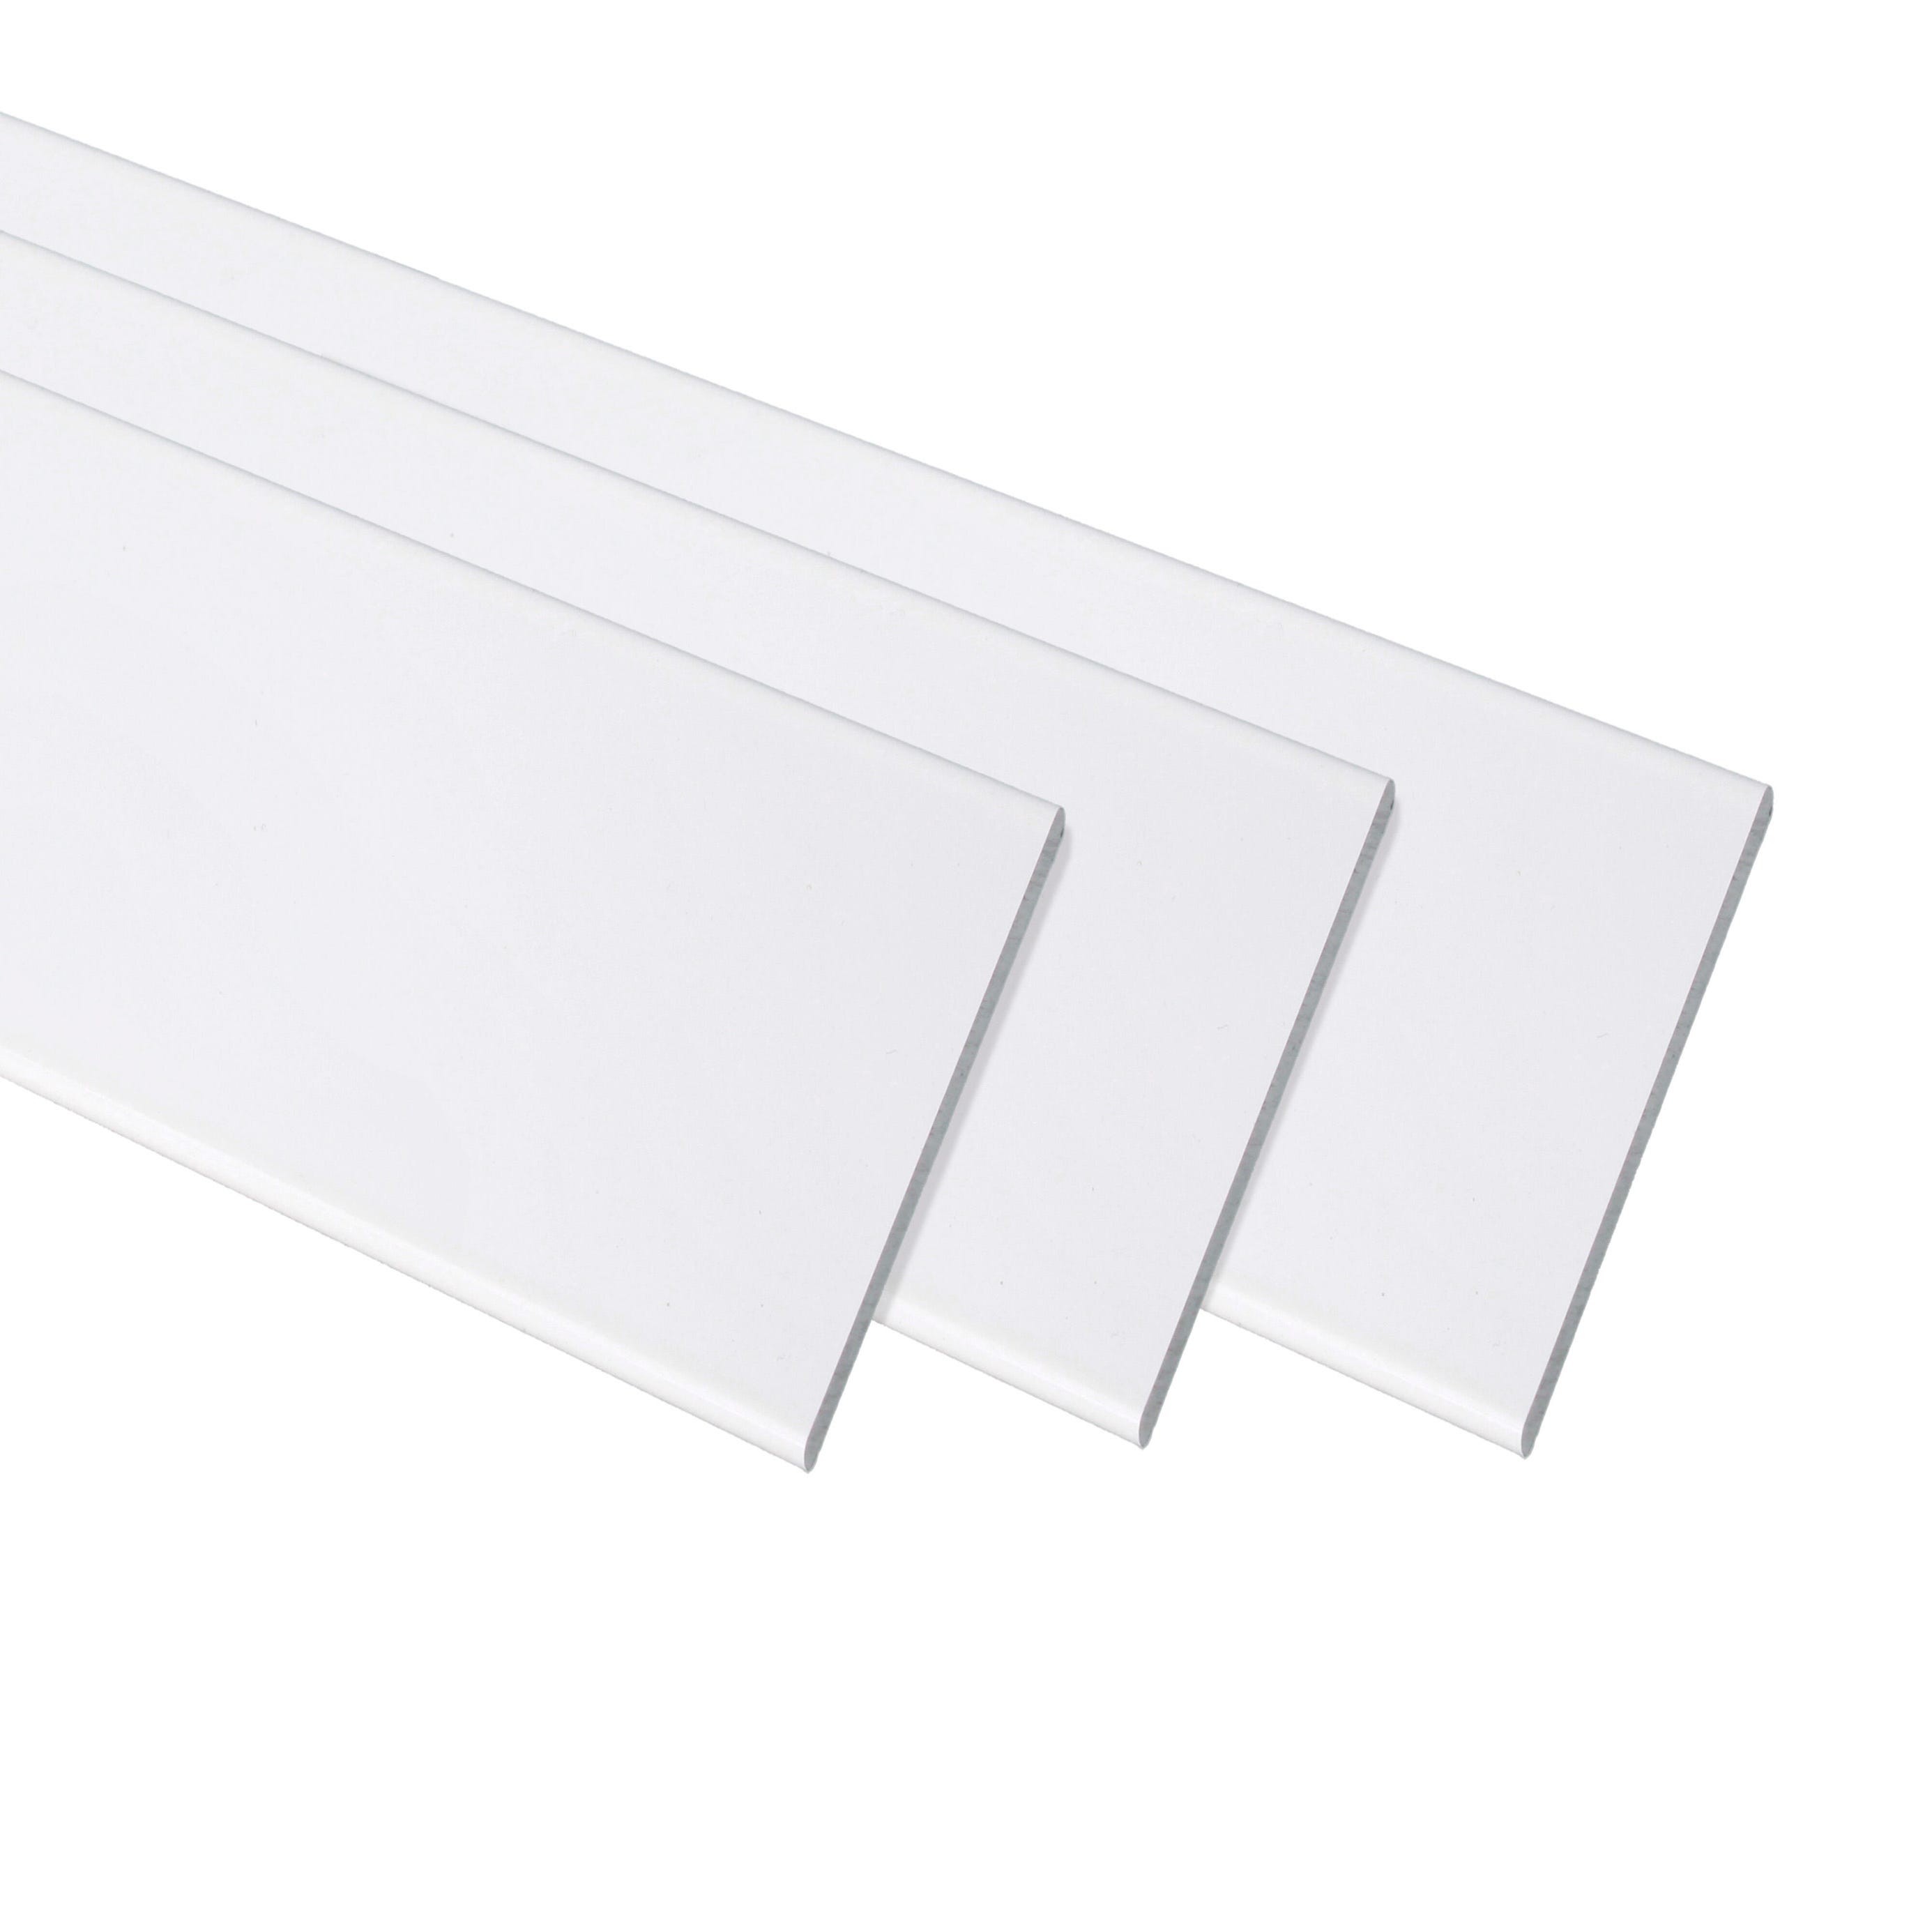 Perfil Pletina Liso Aluminio lacado blanco